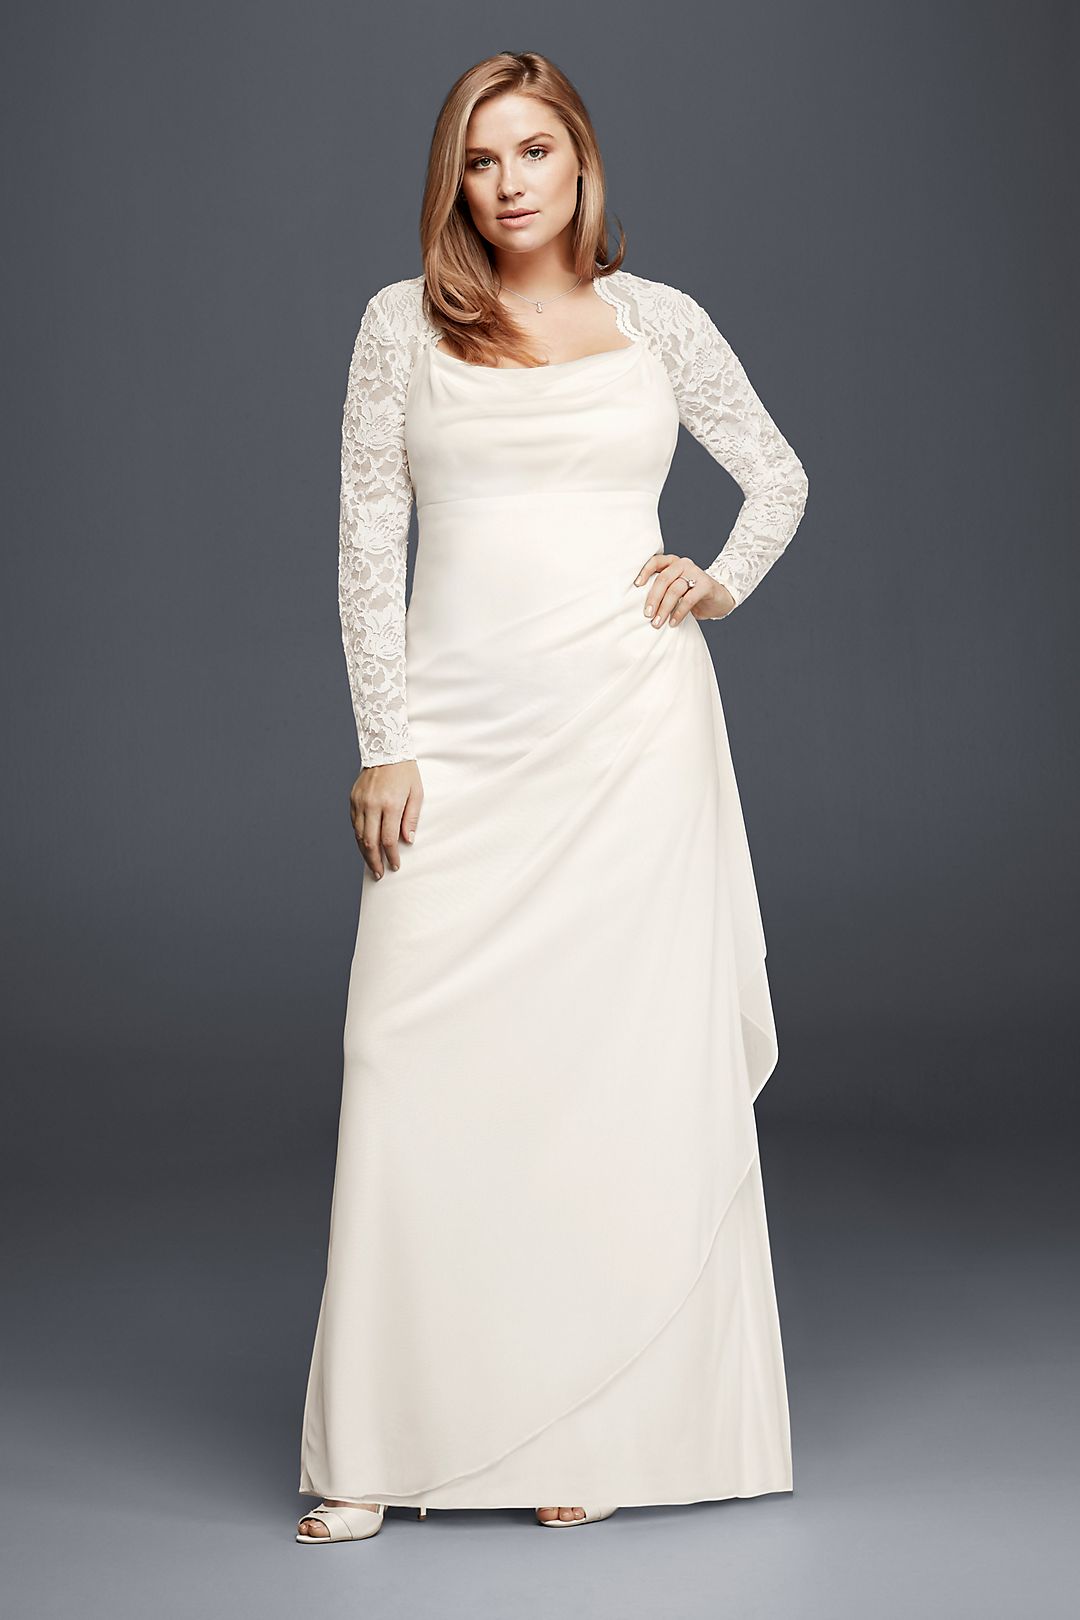 Lace Cap Sleeve Long Mesh Wedding Dress Image 1